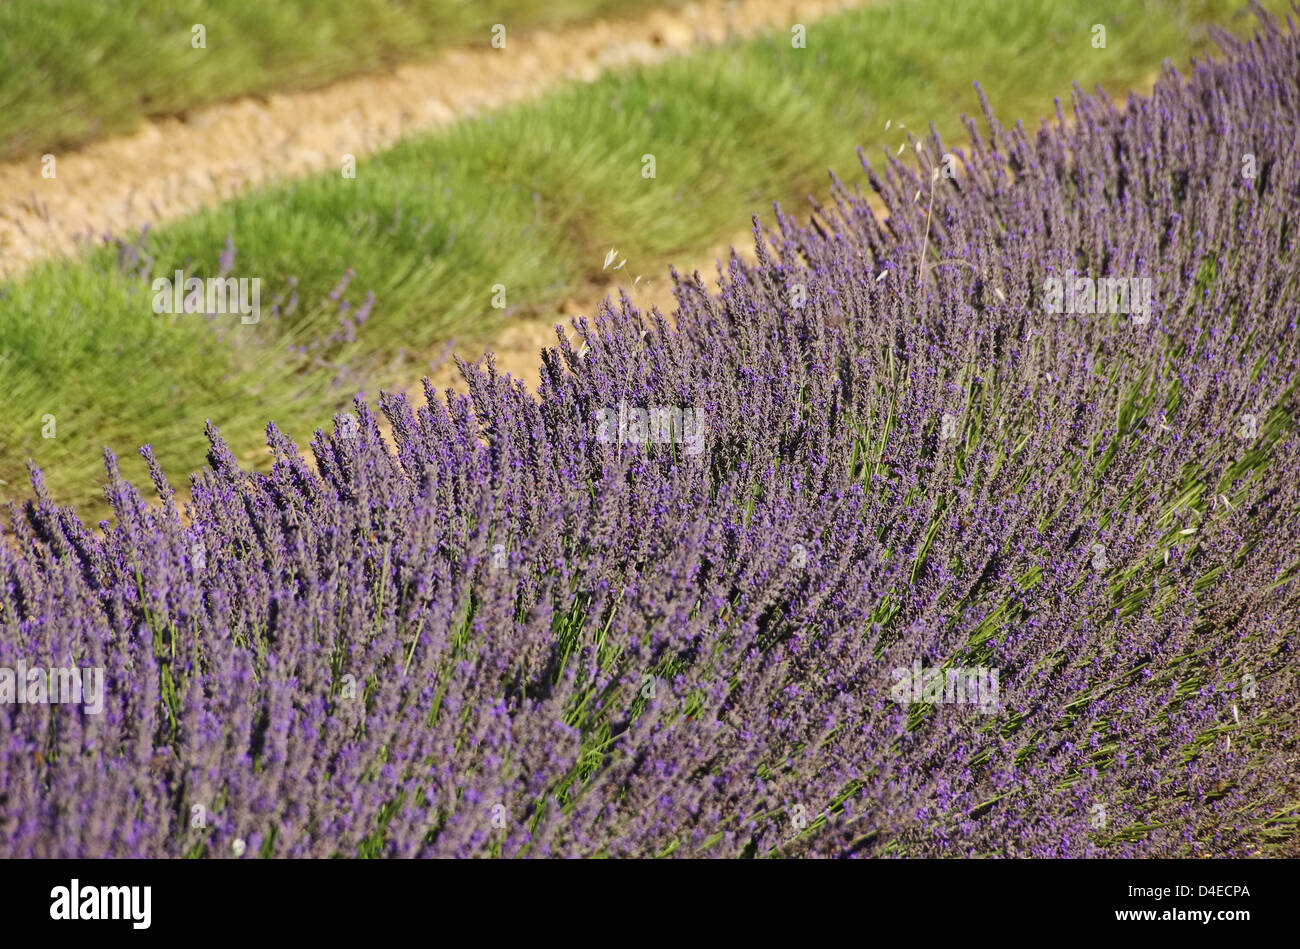 Lavendelfeld Ernte - lavender field harvest 19 Stock Photo